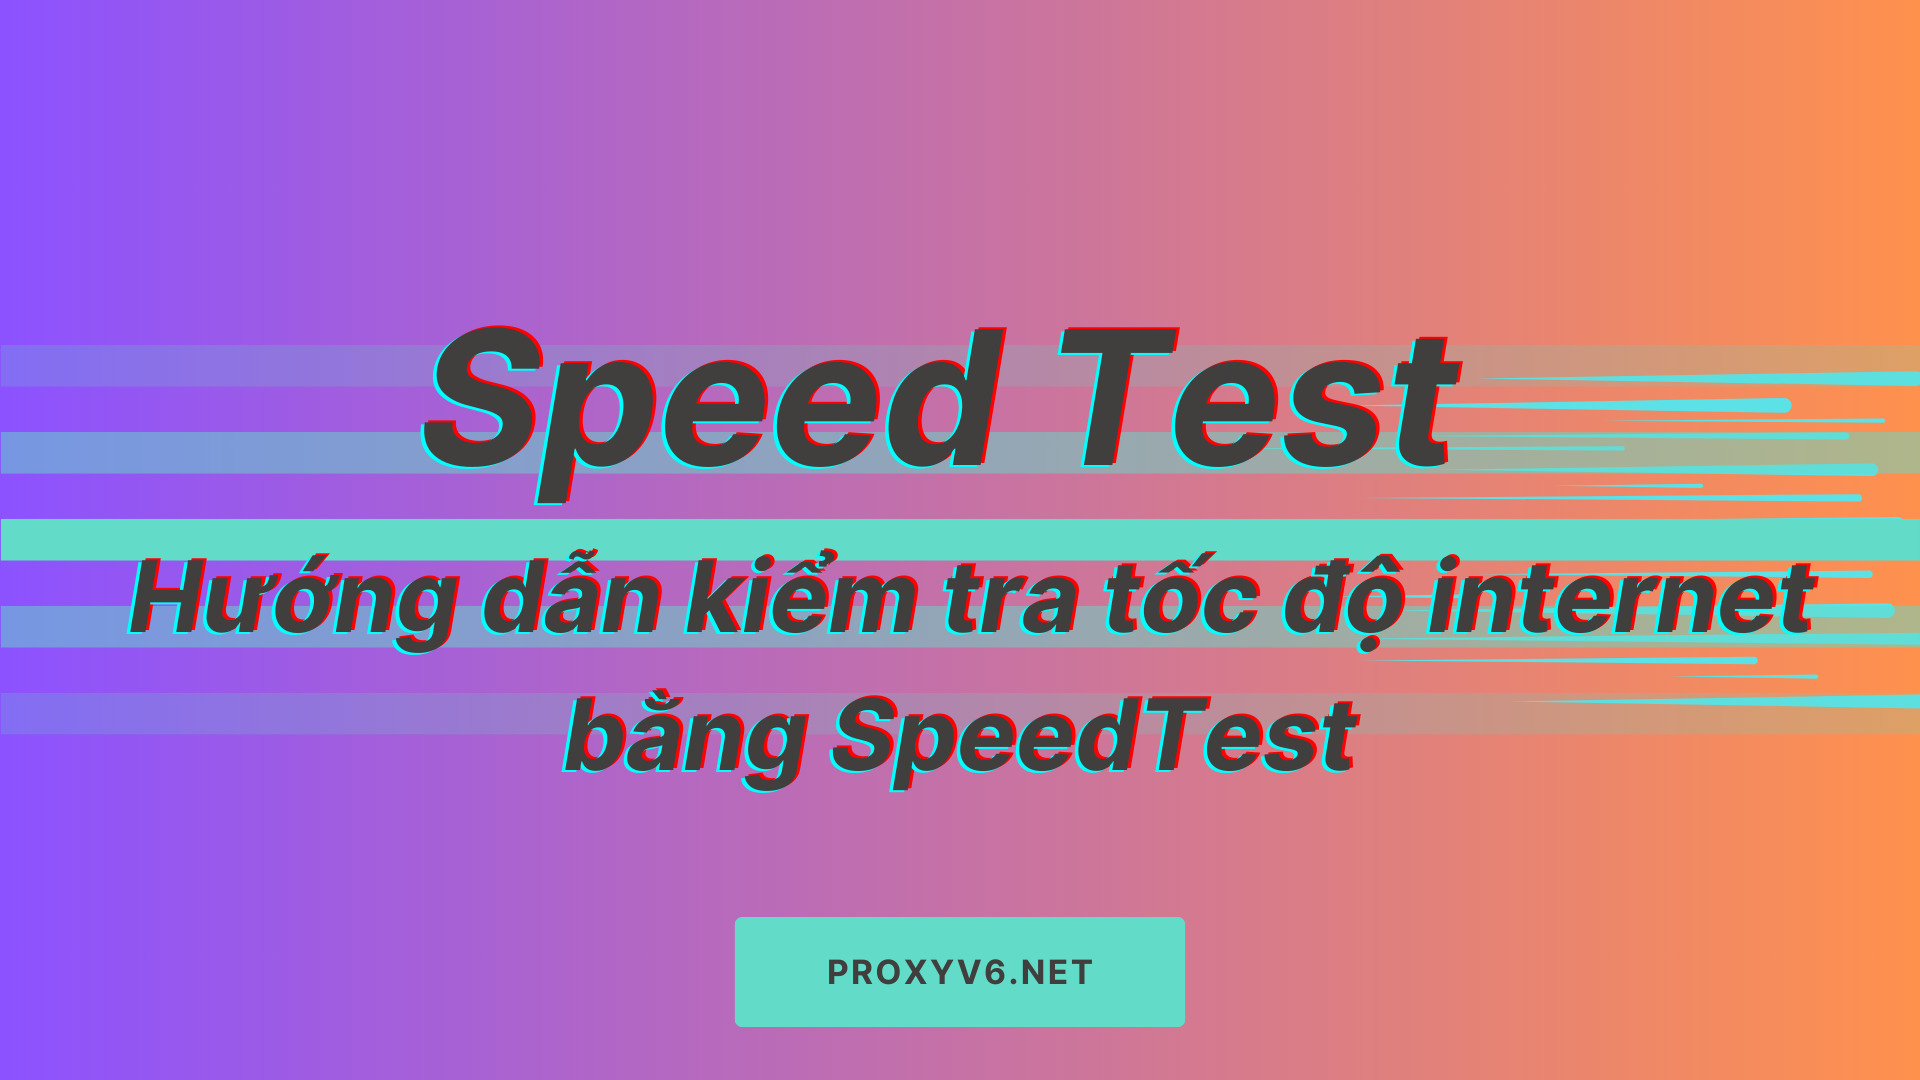 Speed Test - Hướng dẫn kiểm tra tốc độ internet bằng SpeedTest